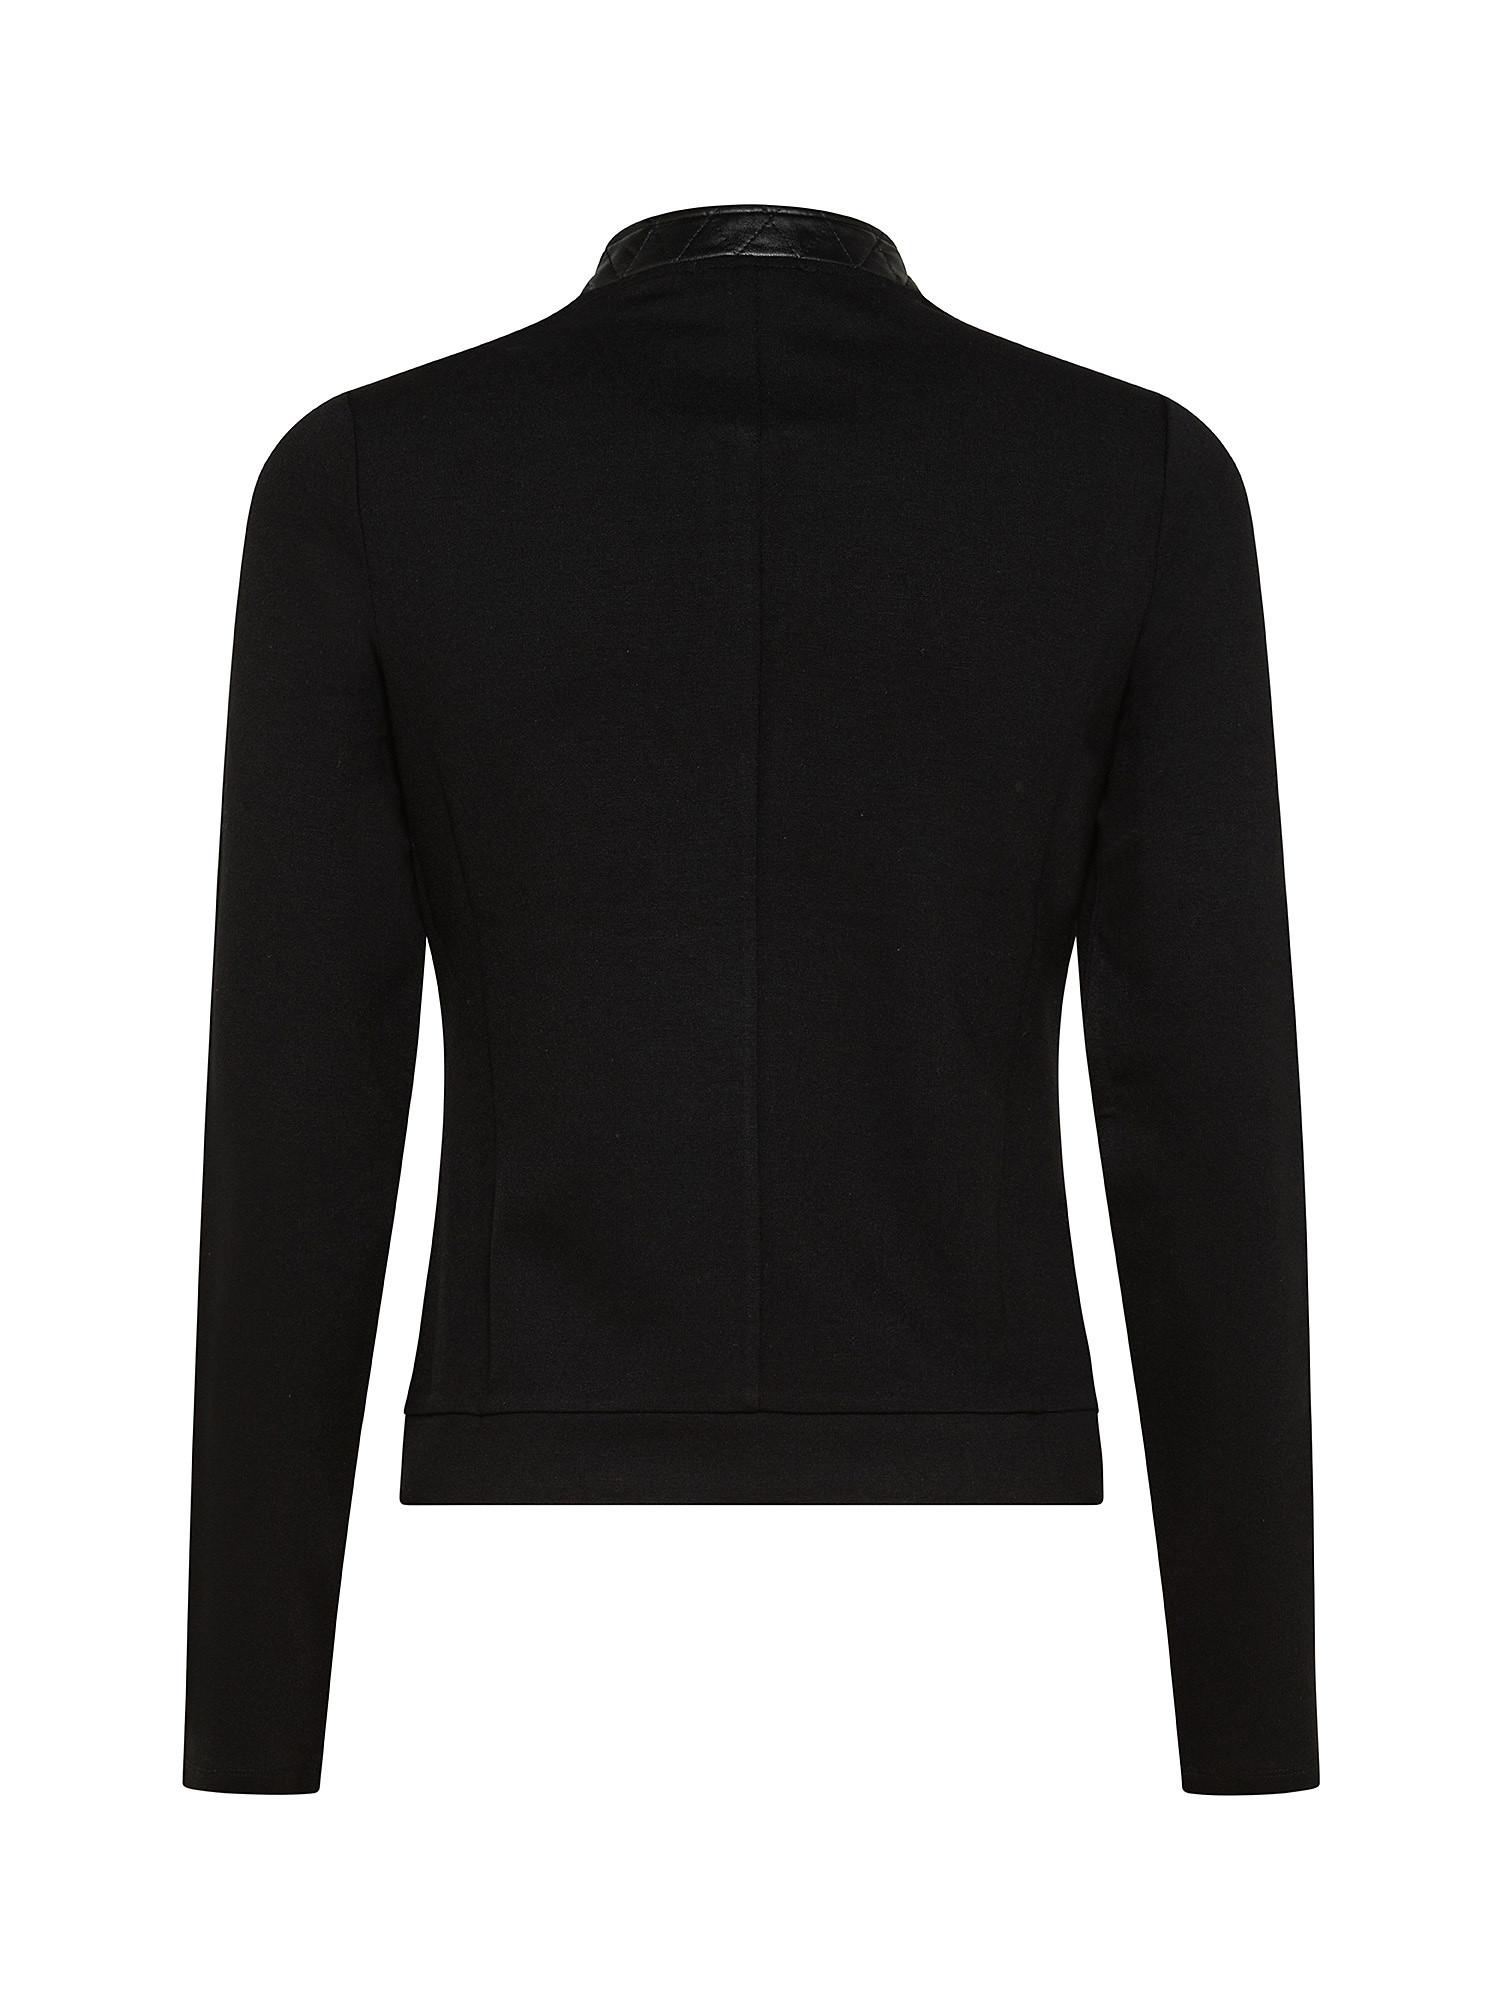 Koan - Jacket with eco-leather inserts, Black, large image number 1